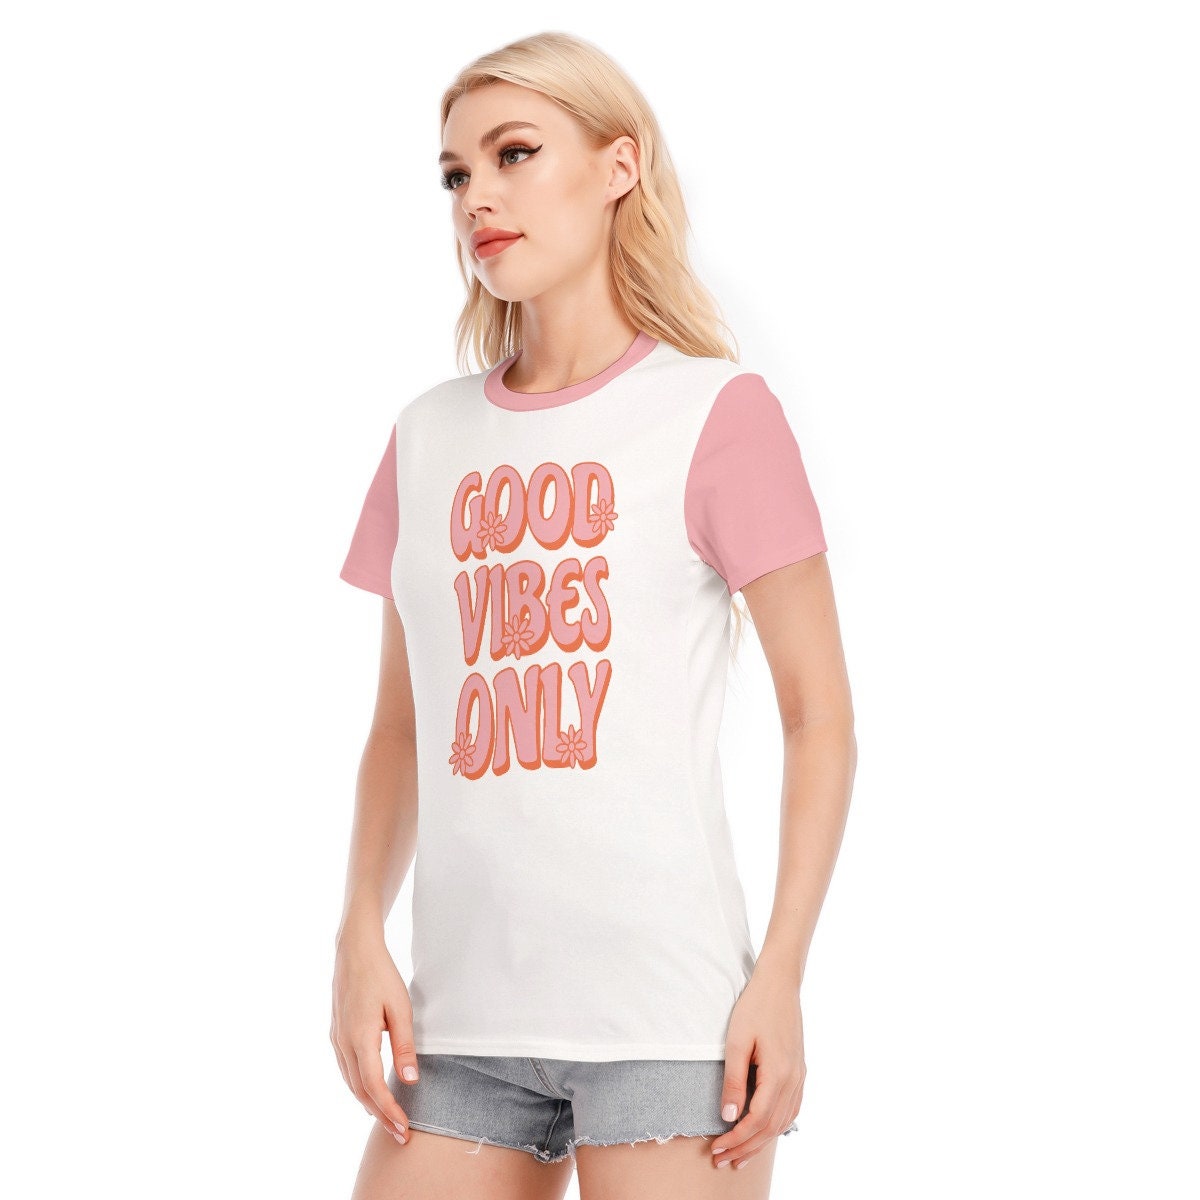 T-shirt rétro, T-shirts mots, T-shirt mots vintage, T-shirt mots roses, Tshirt hippie femmes, T-shirt style vintage, T-shirt rose blanc